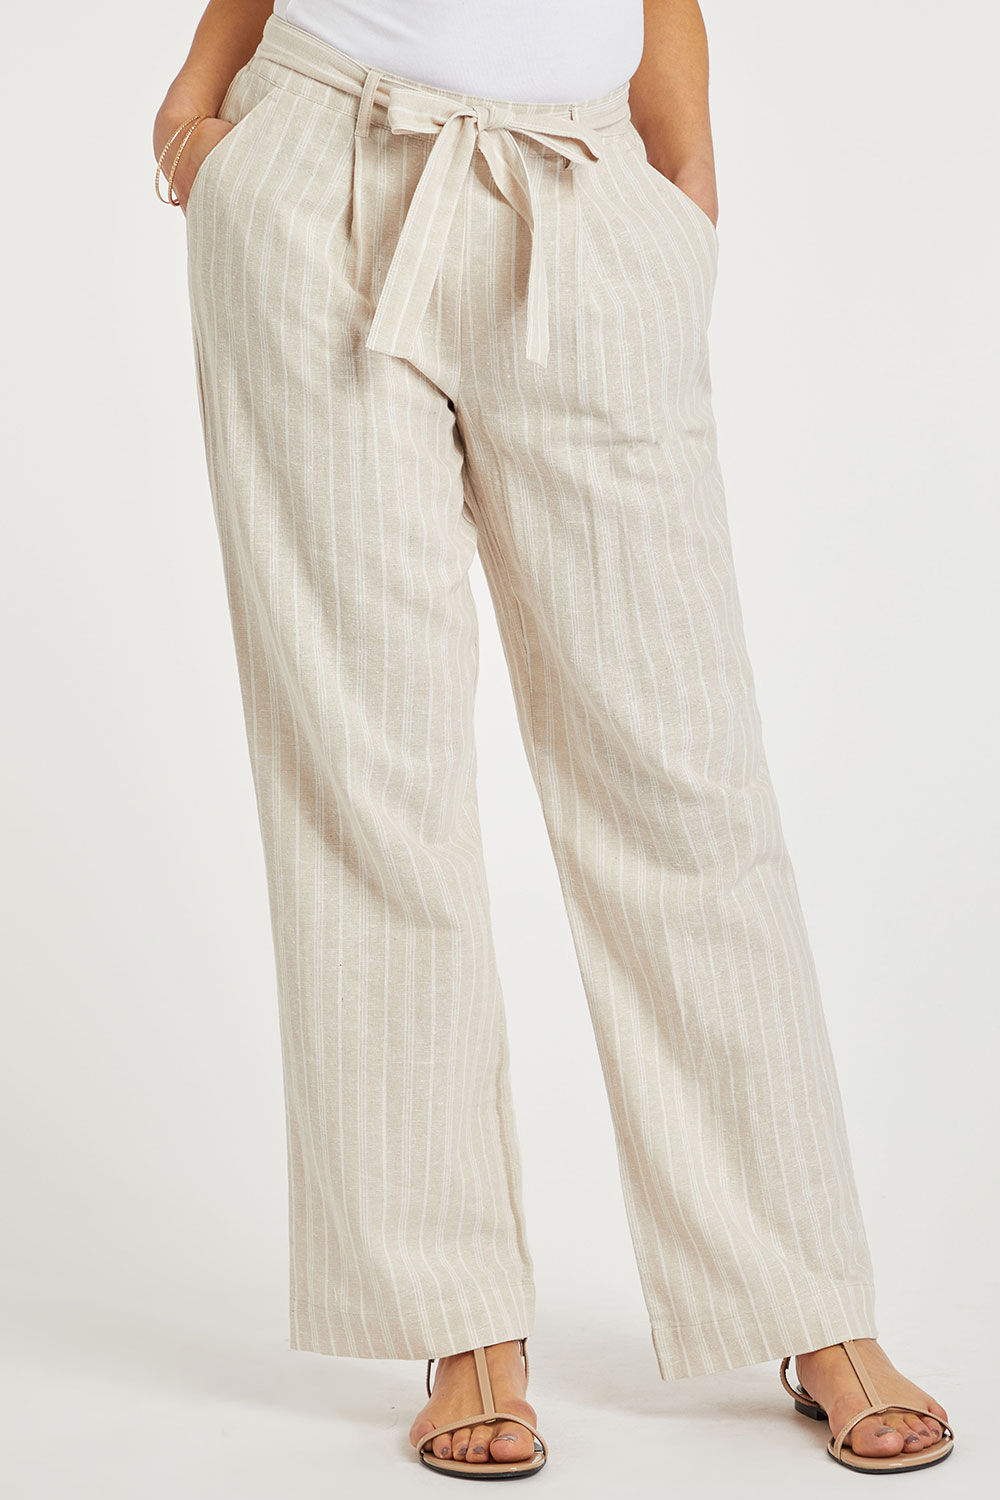 Bonmarche Ladies Cream Linen Viscose Stripe Wide Leg Trousers, Size: 26